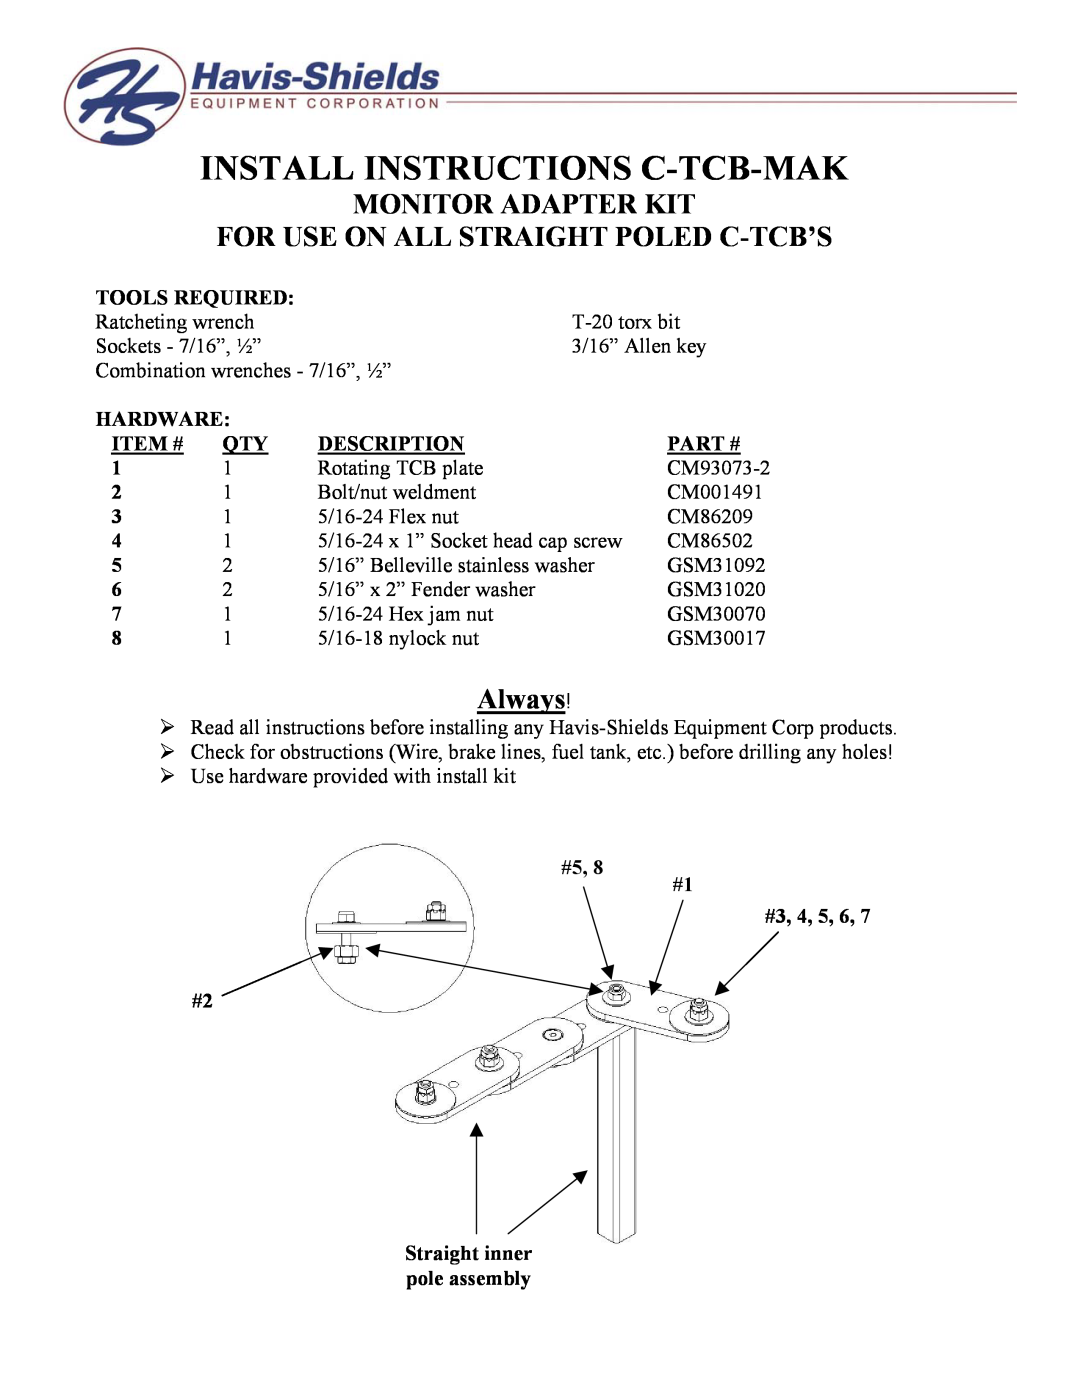 Havis-Shields C-TCB-MAK manual Tools Required, Hardware, Item #, Description, Part #, #5 #2 Straight inner pole assembly 